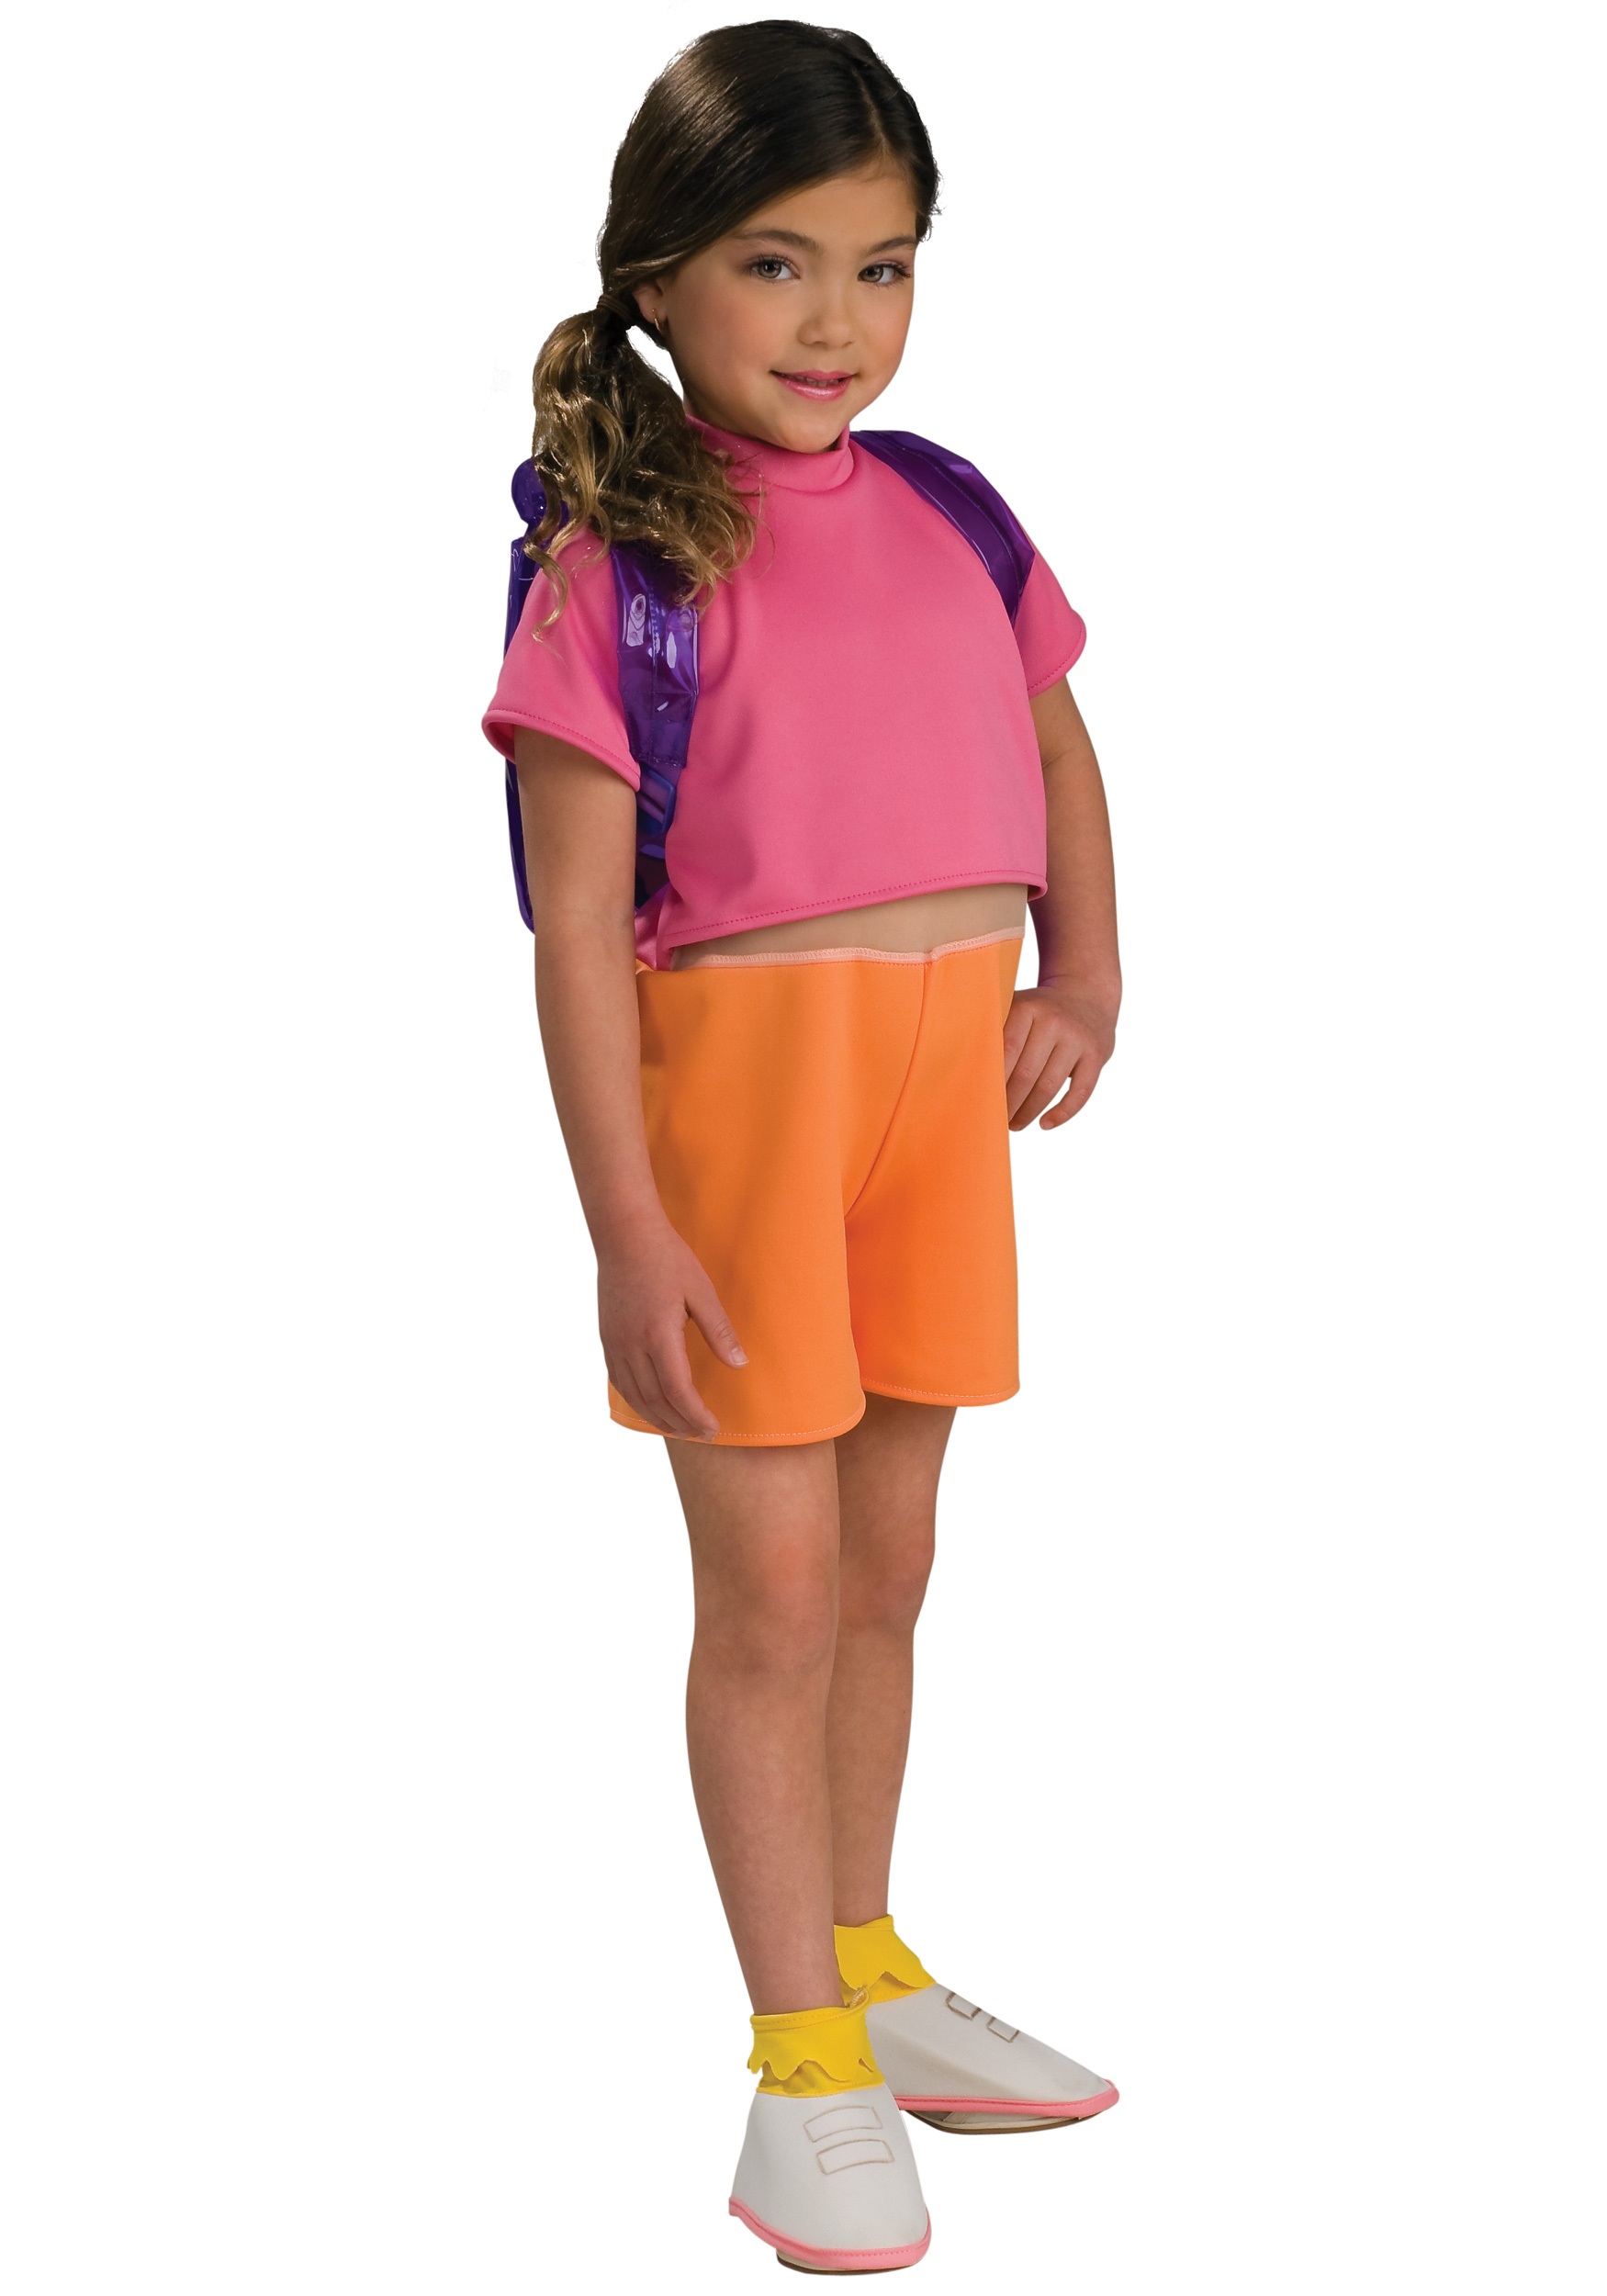 Dora the Explorer Toddler Costume.